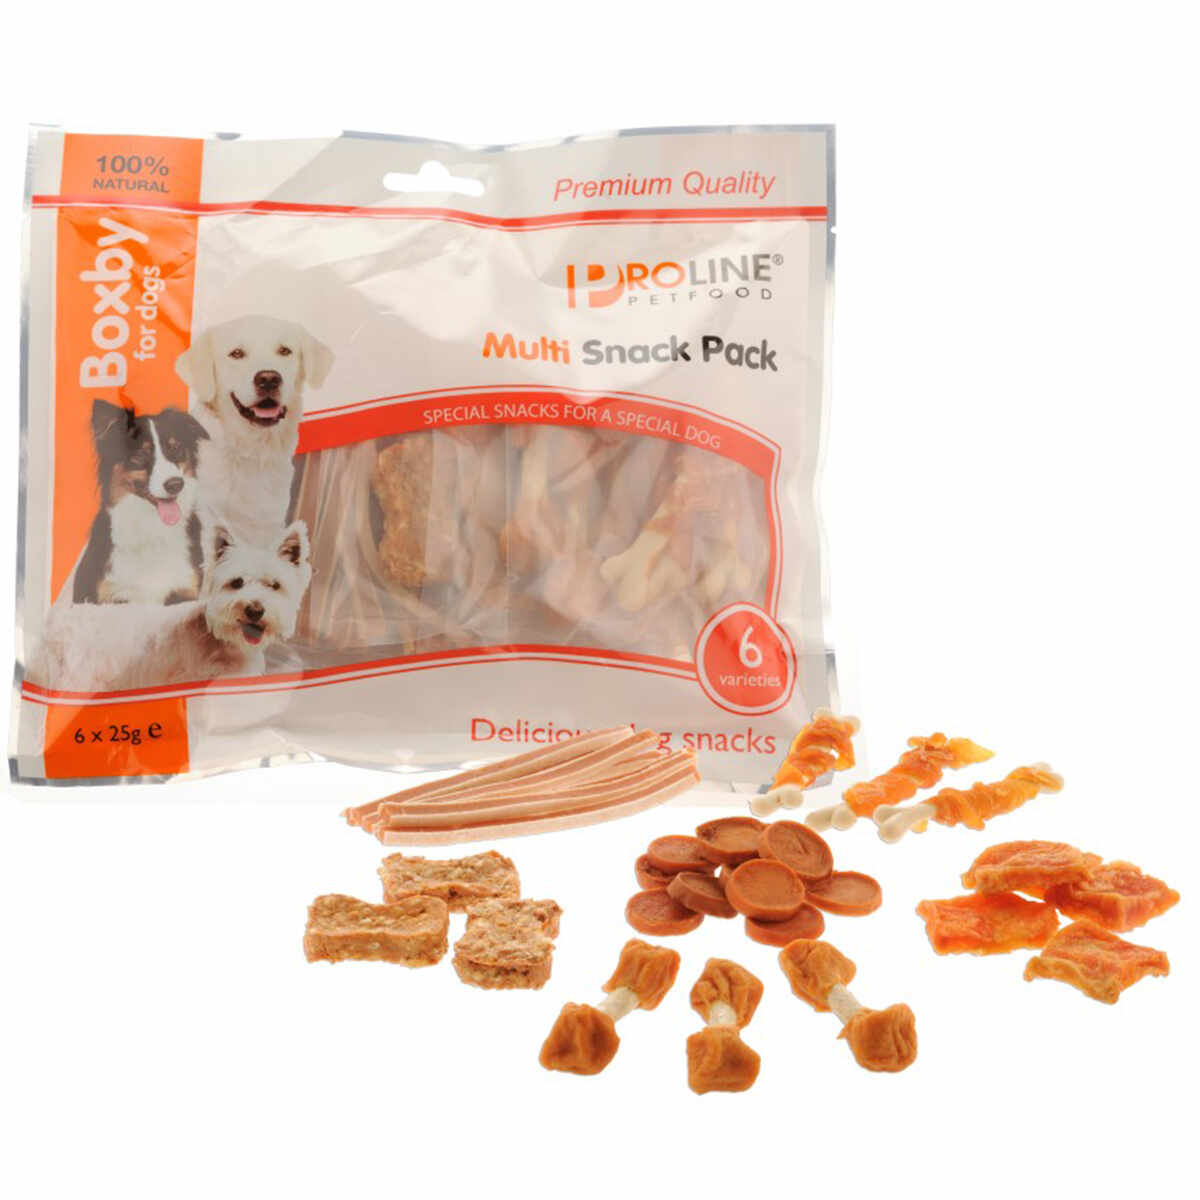 Proline Dog Pachet Multi Snack 6 x 25 g